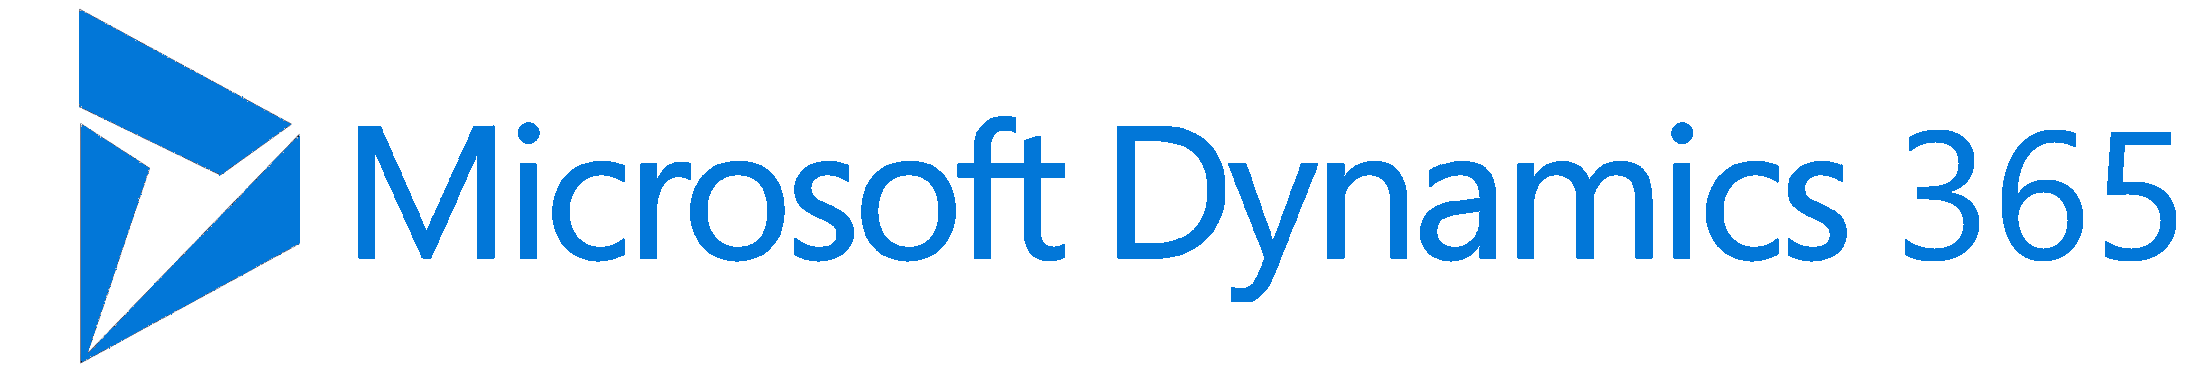 New Microsoft Dynamics Logo - How to change a user's password in Microsoft Dynamics GP